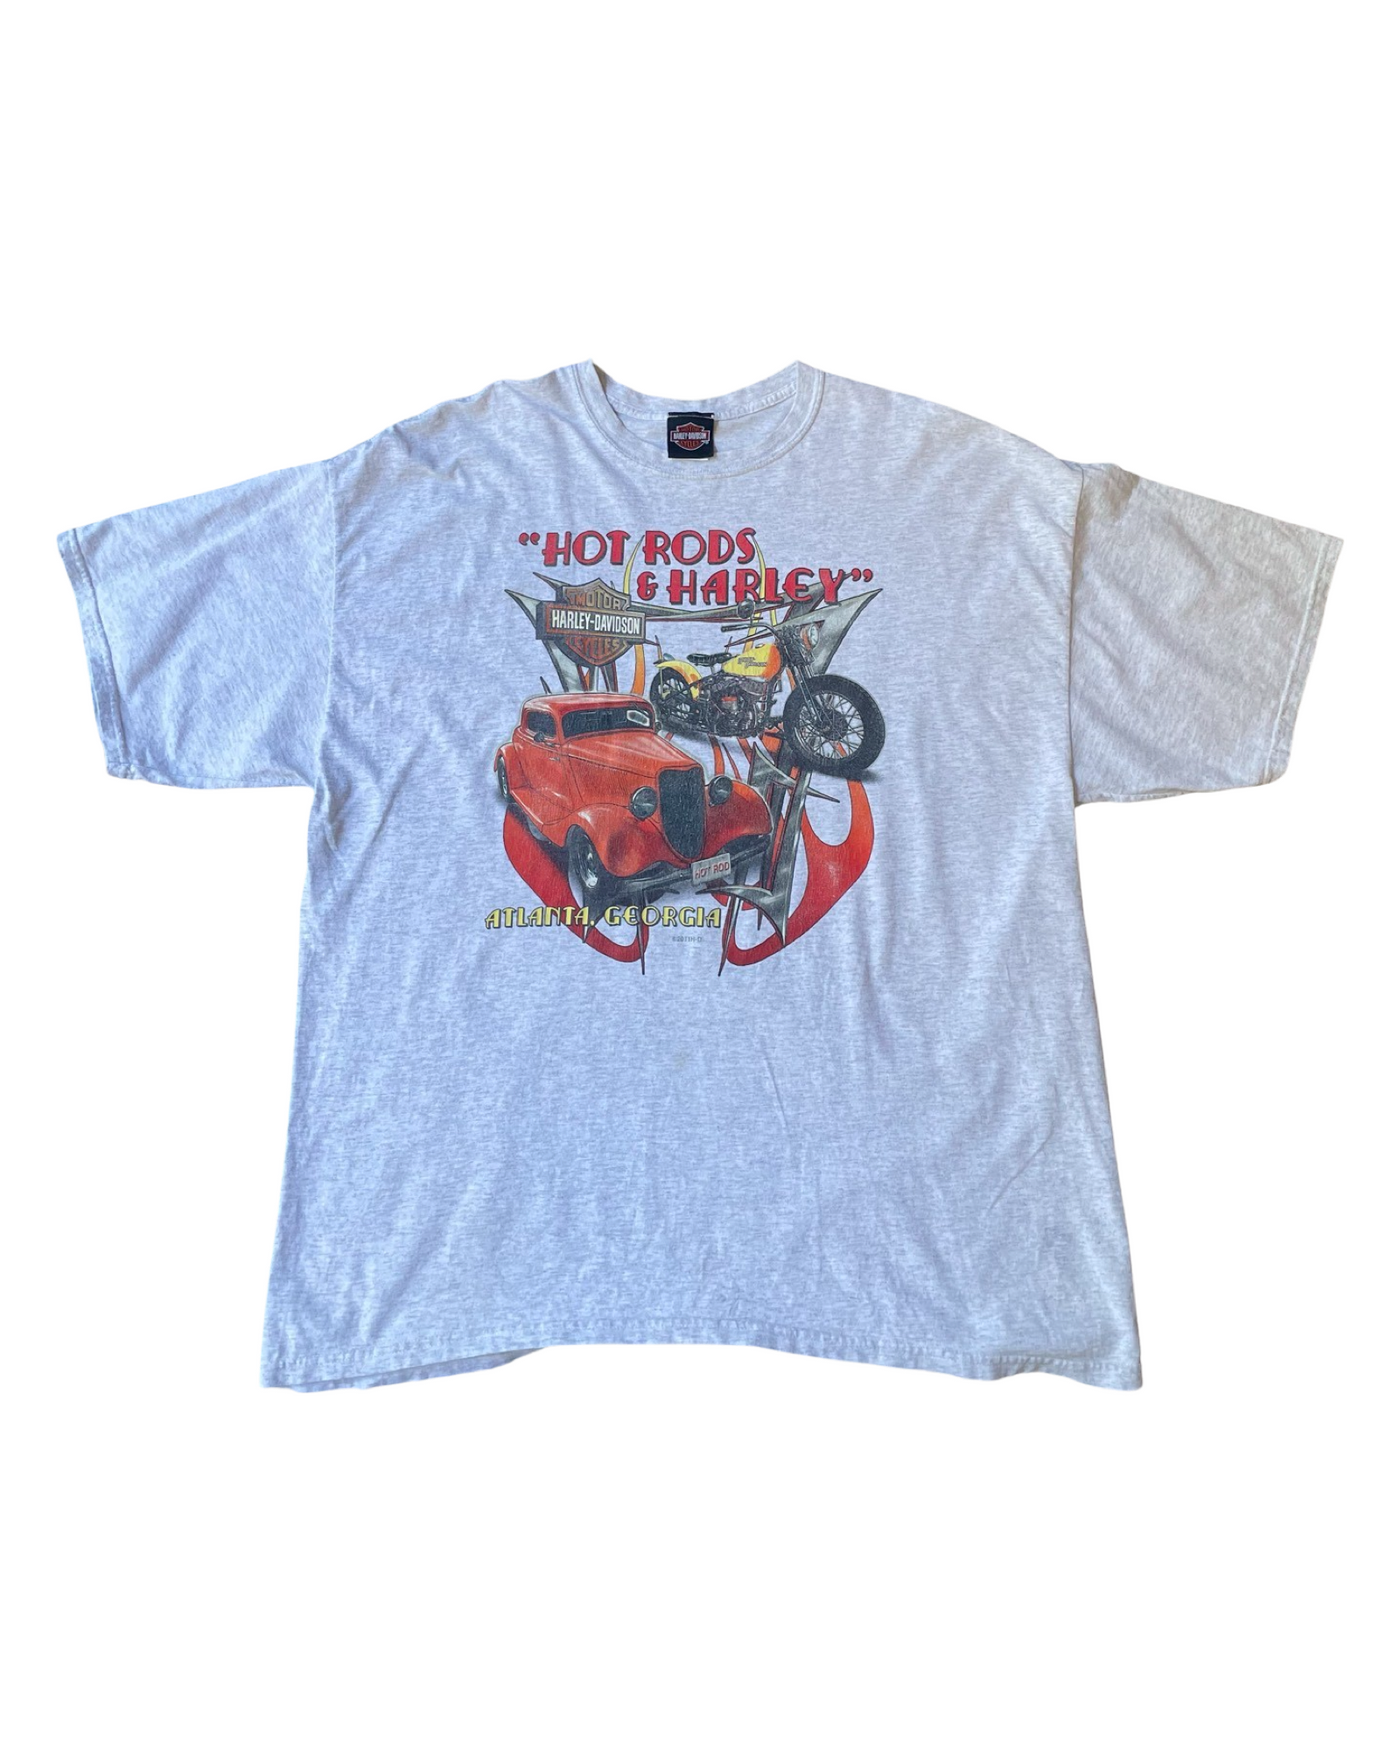 Vintage Harley Davidson T-Shirt Size XXL